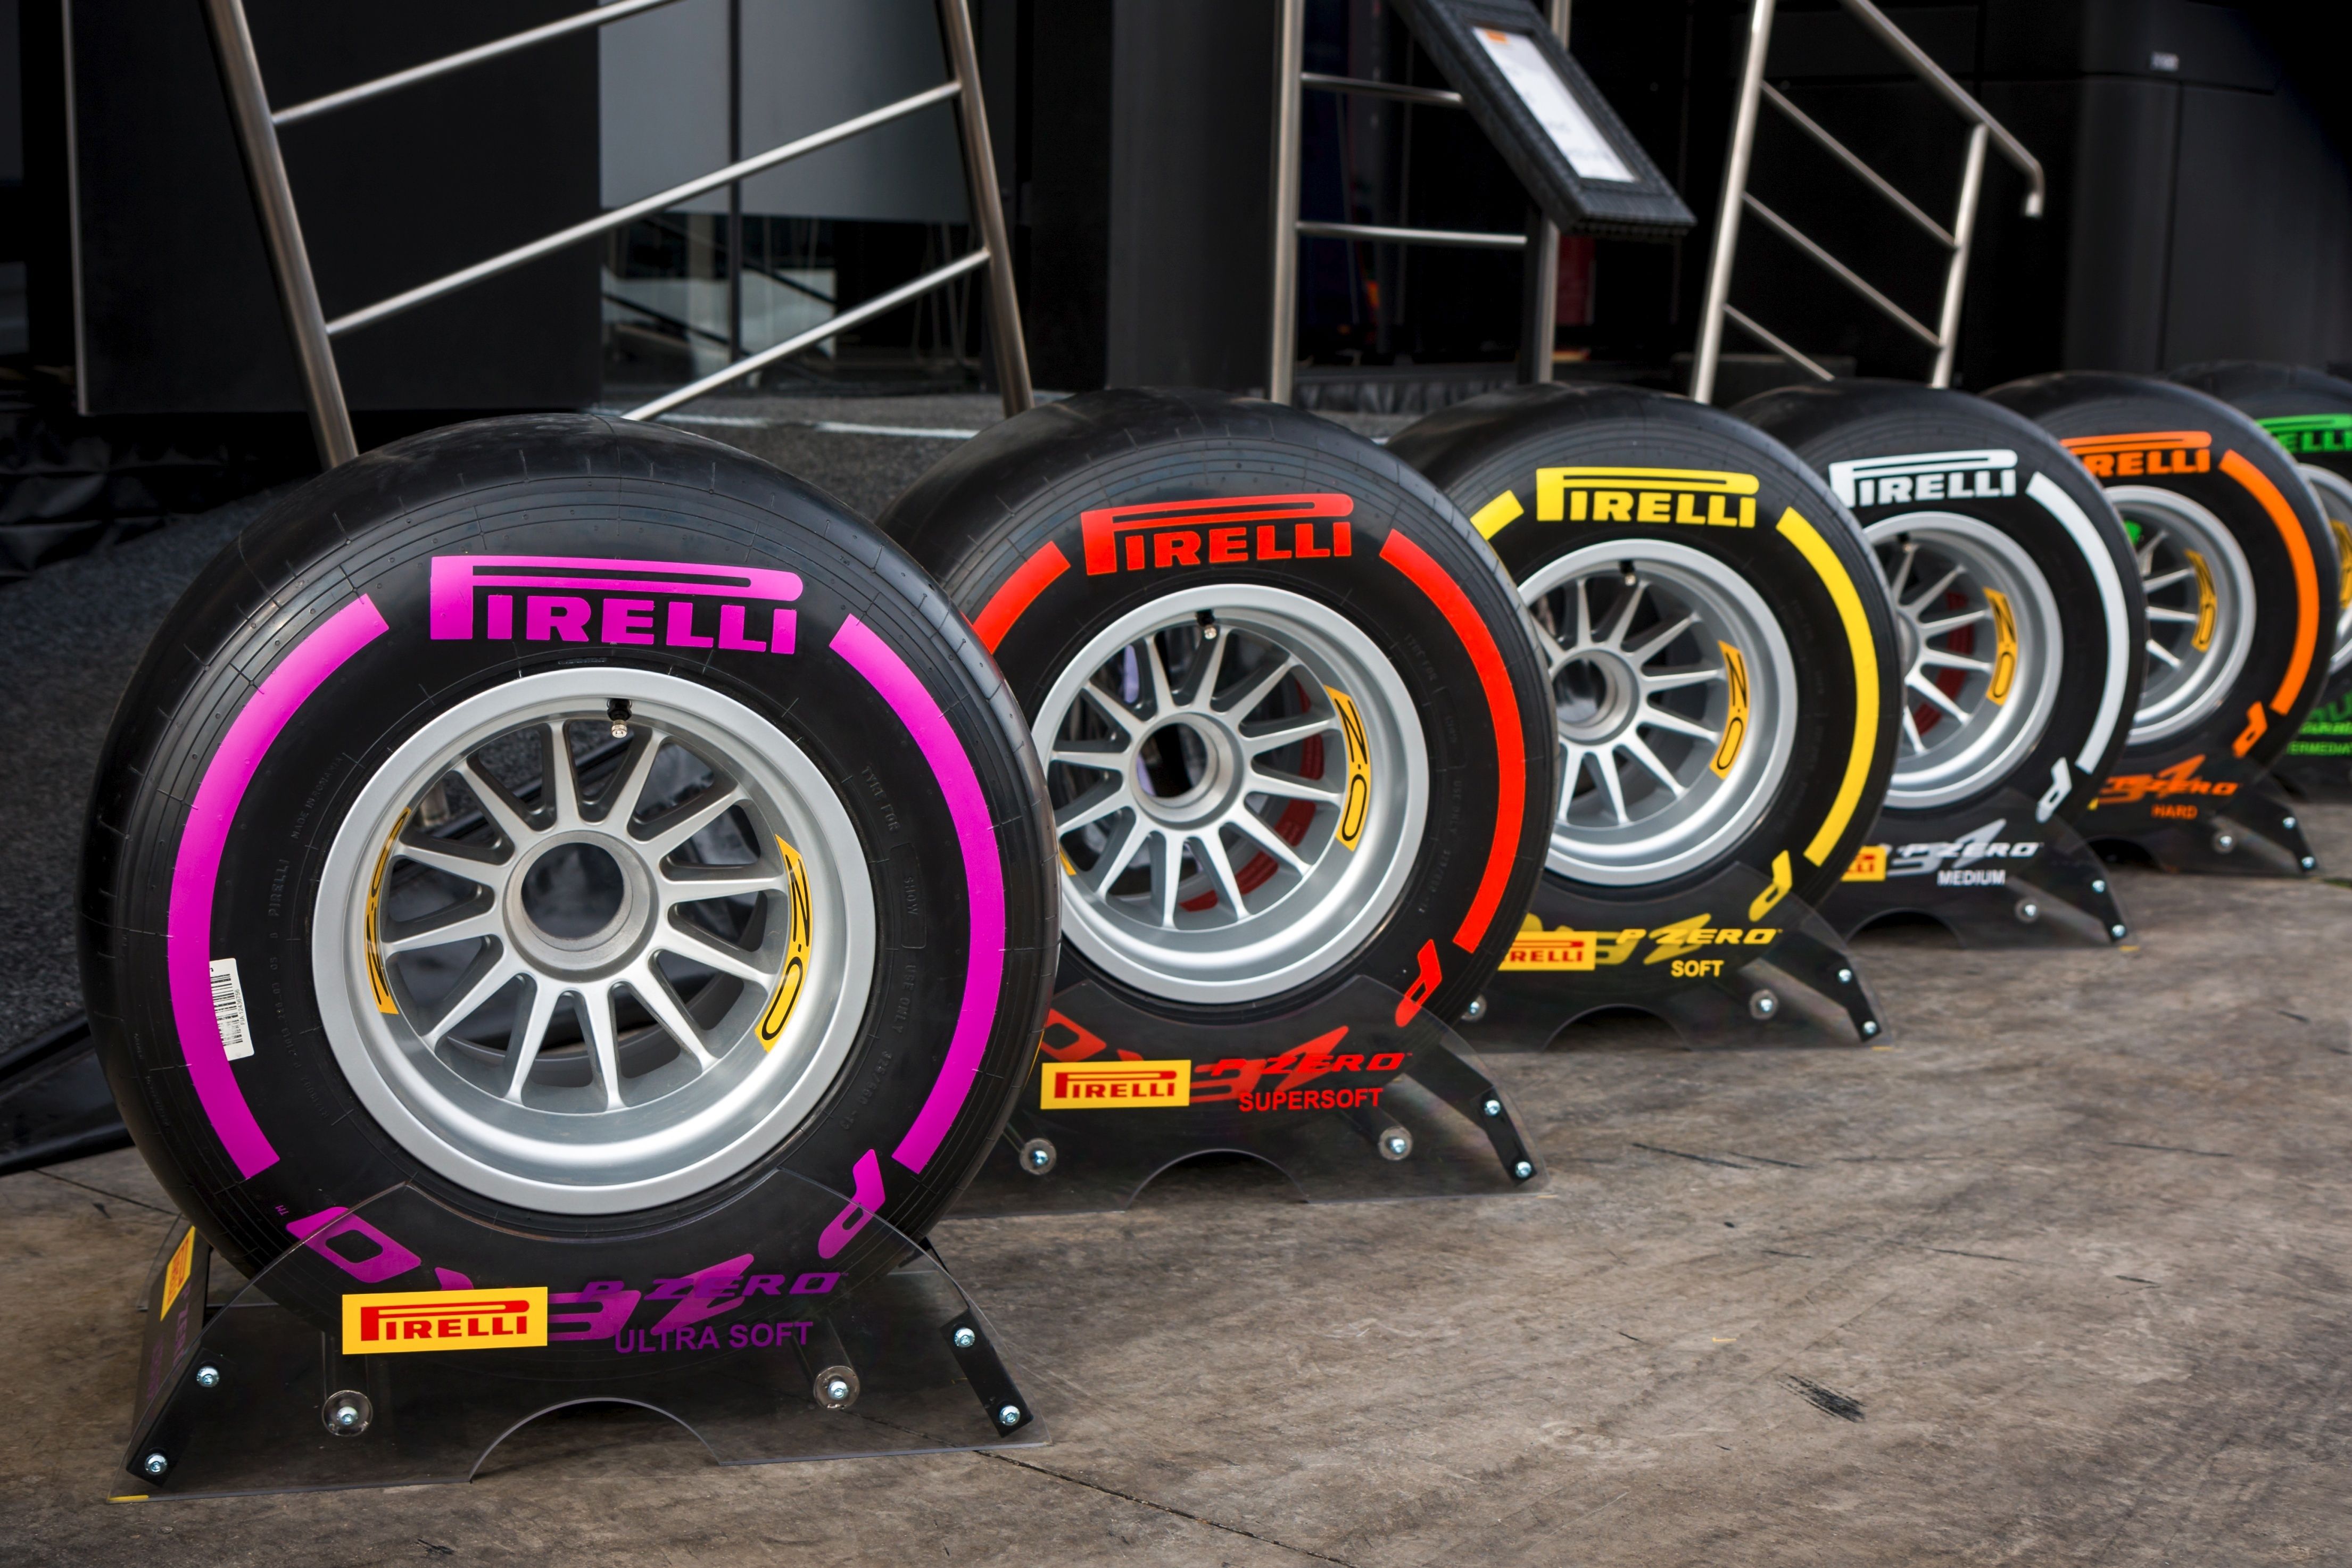 Pirelli F1 tires.